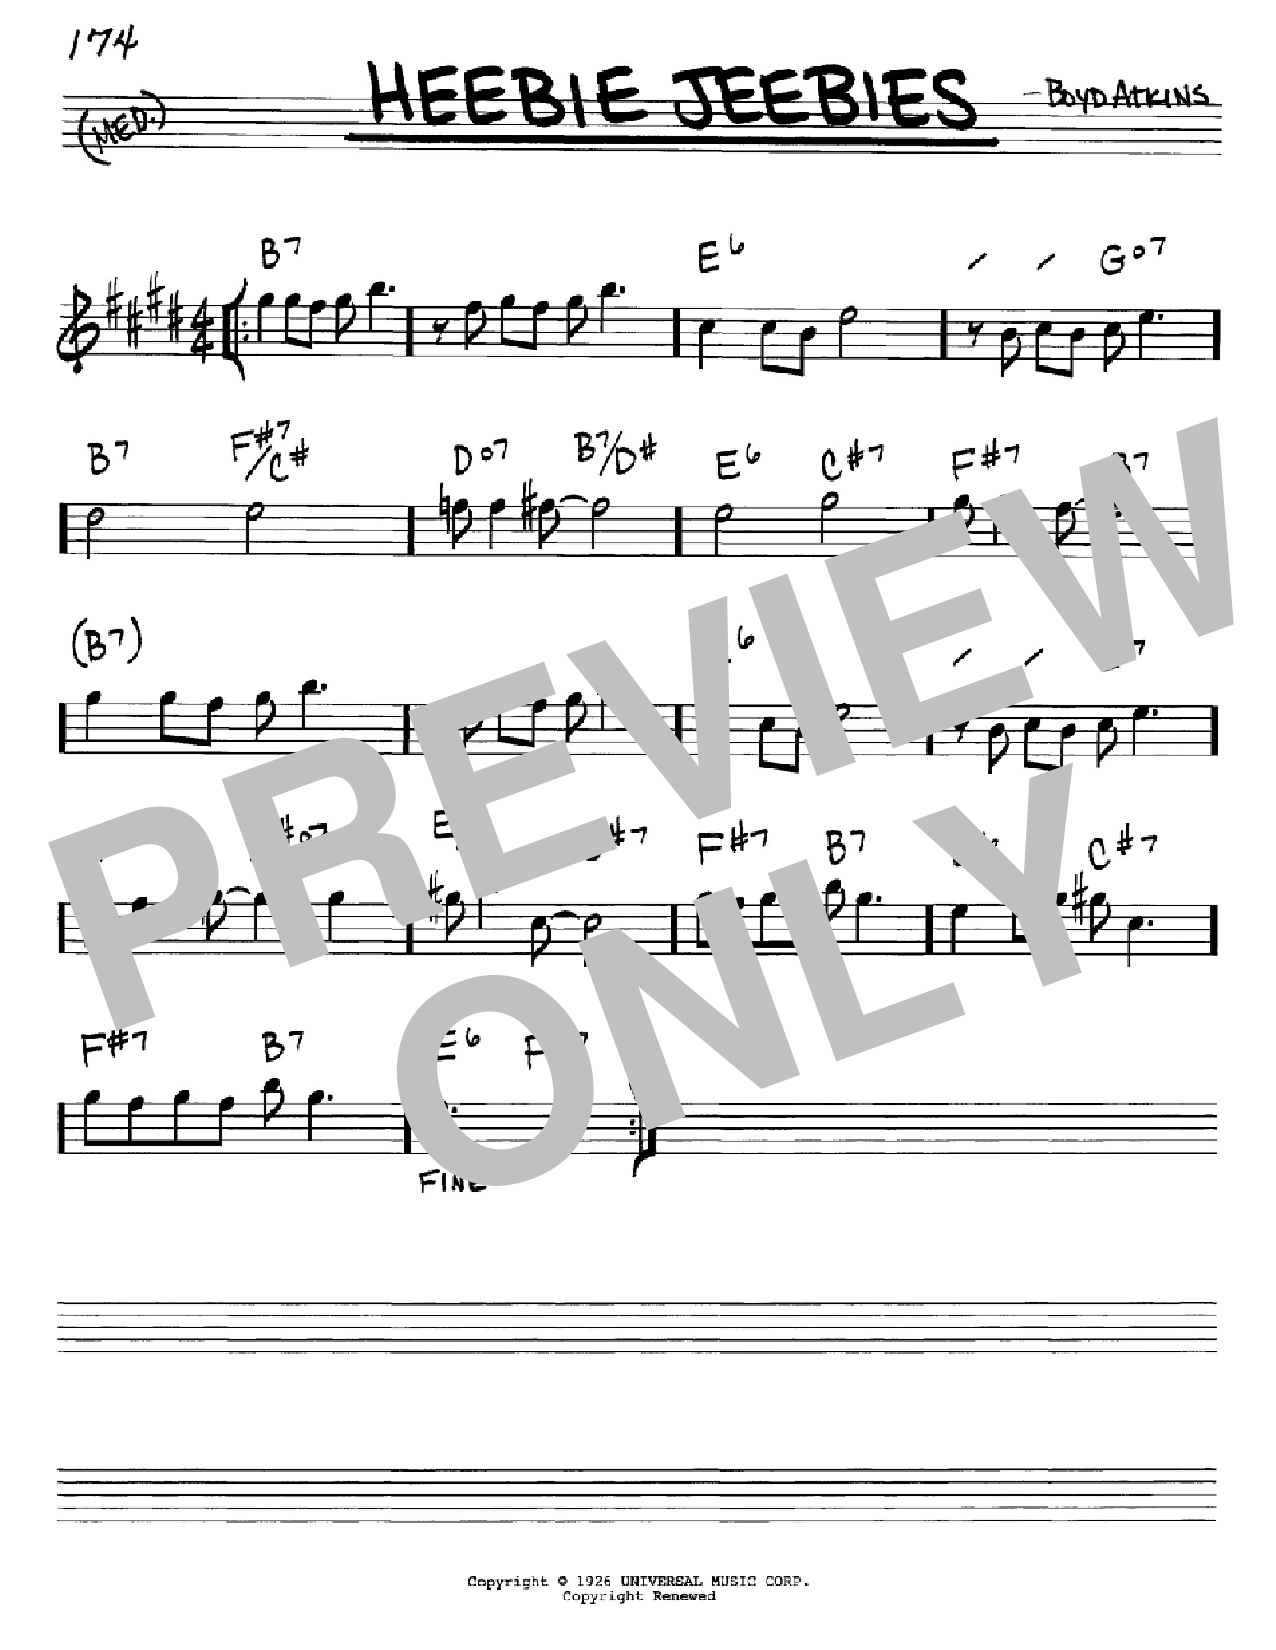 Download Louis Armstrong Heebie Jeebies Sheet Music